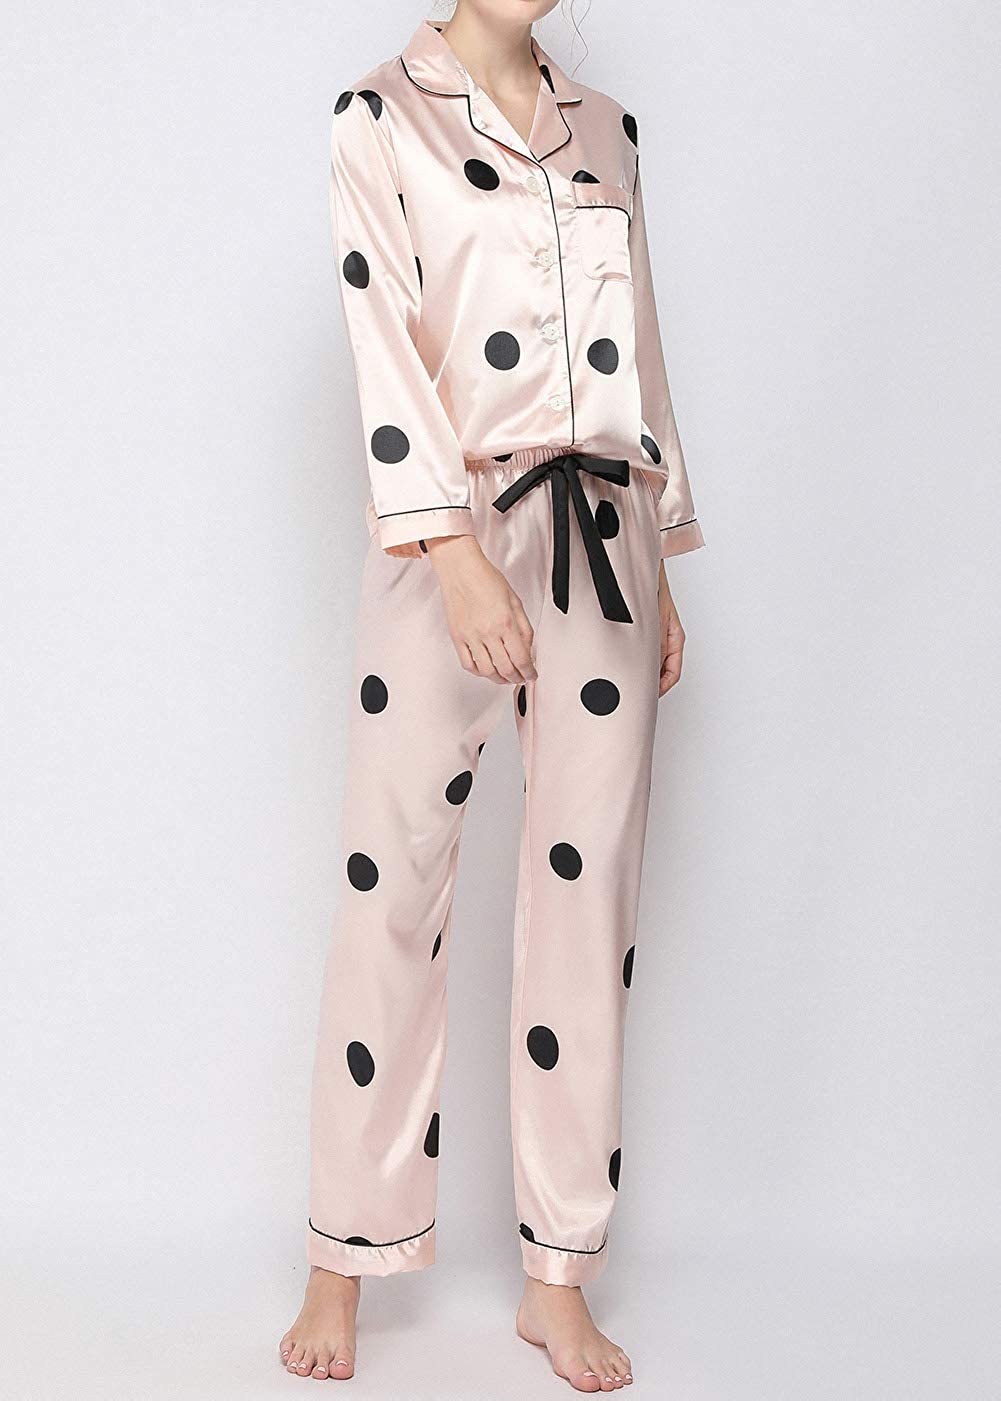 NXY Pajama Set for Women Cute Lingerie Satin Loose Pajama Pants and Long Sleevese Tops